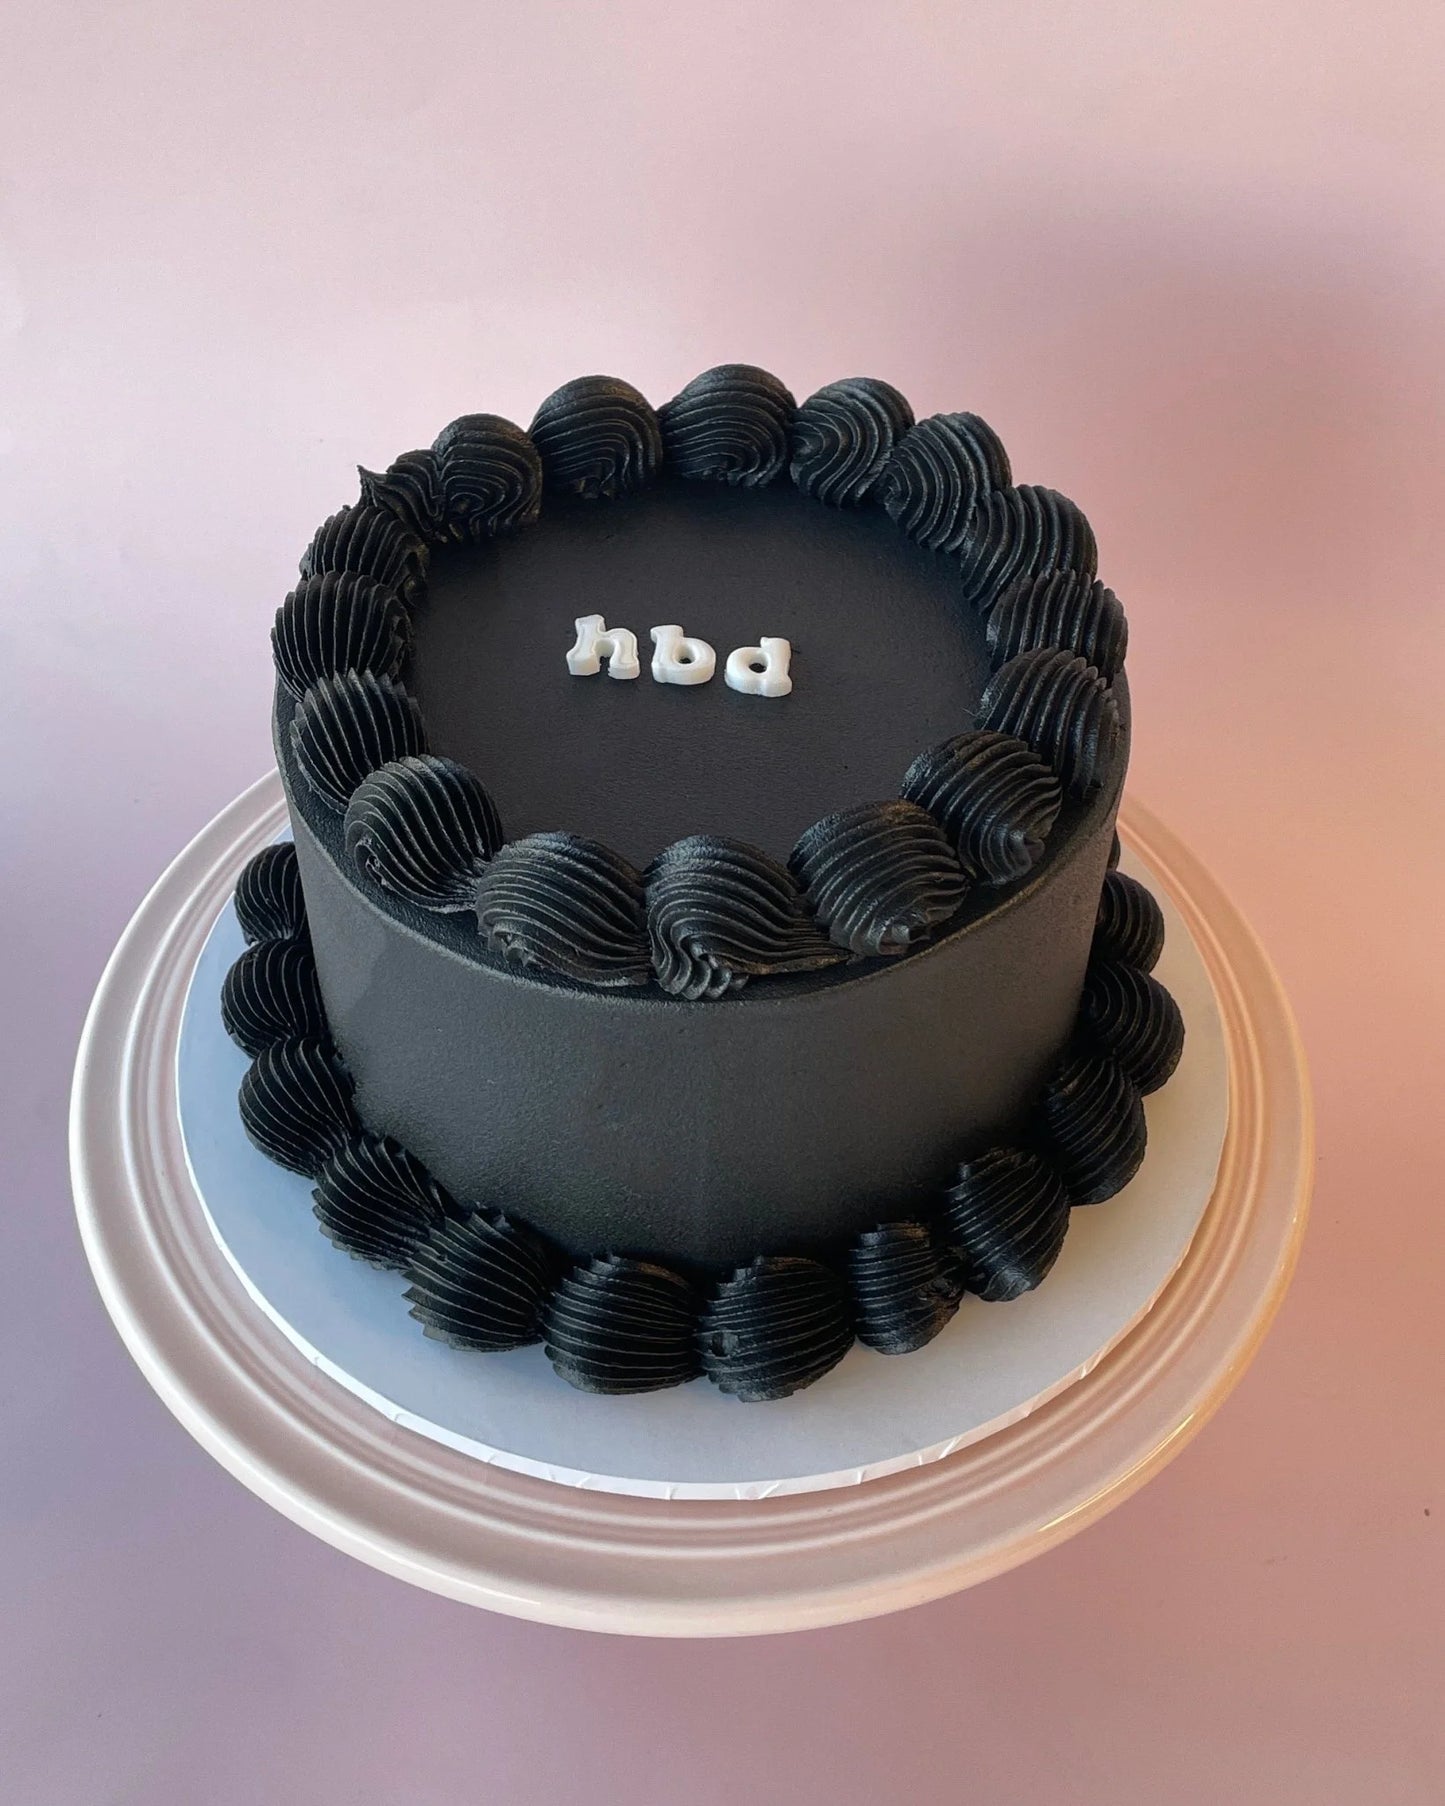 Black personalise sponge cake-bannos cakes-sydney delivery 